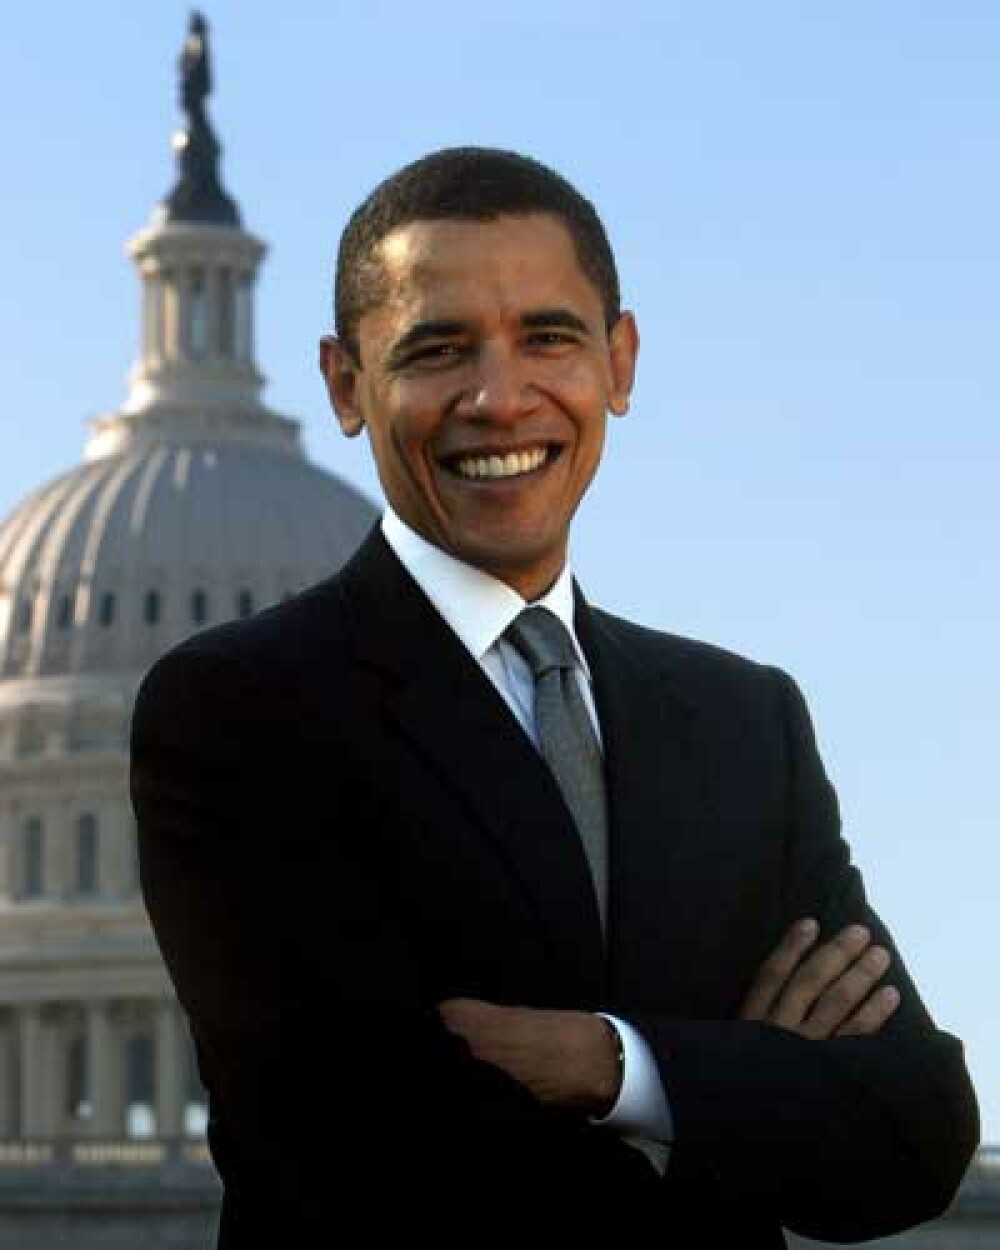 Barack Obama, intr-o ipostaza inedita: de cantaret! - Imaginea 1